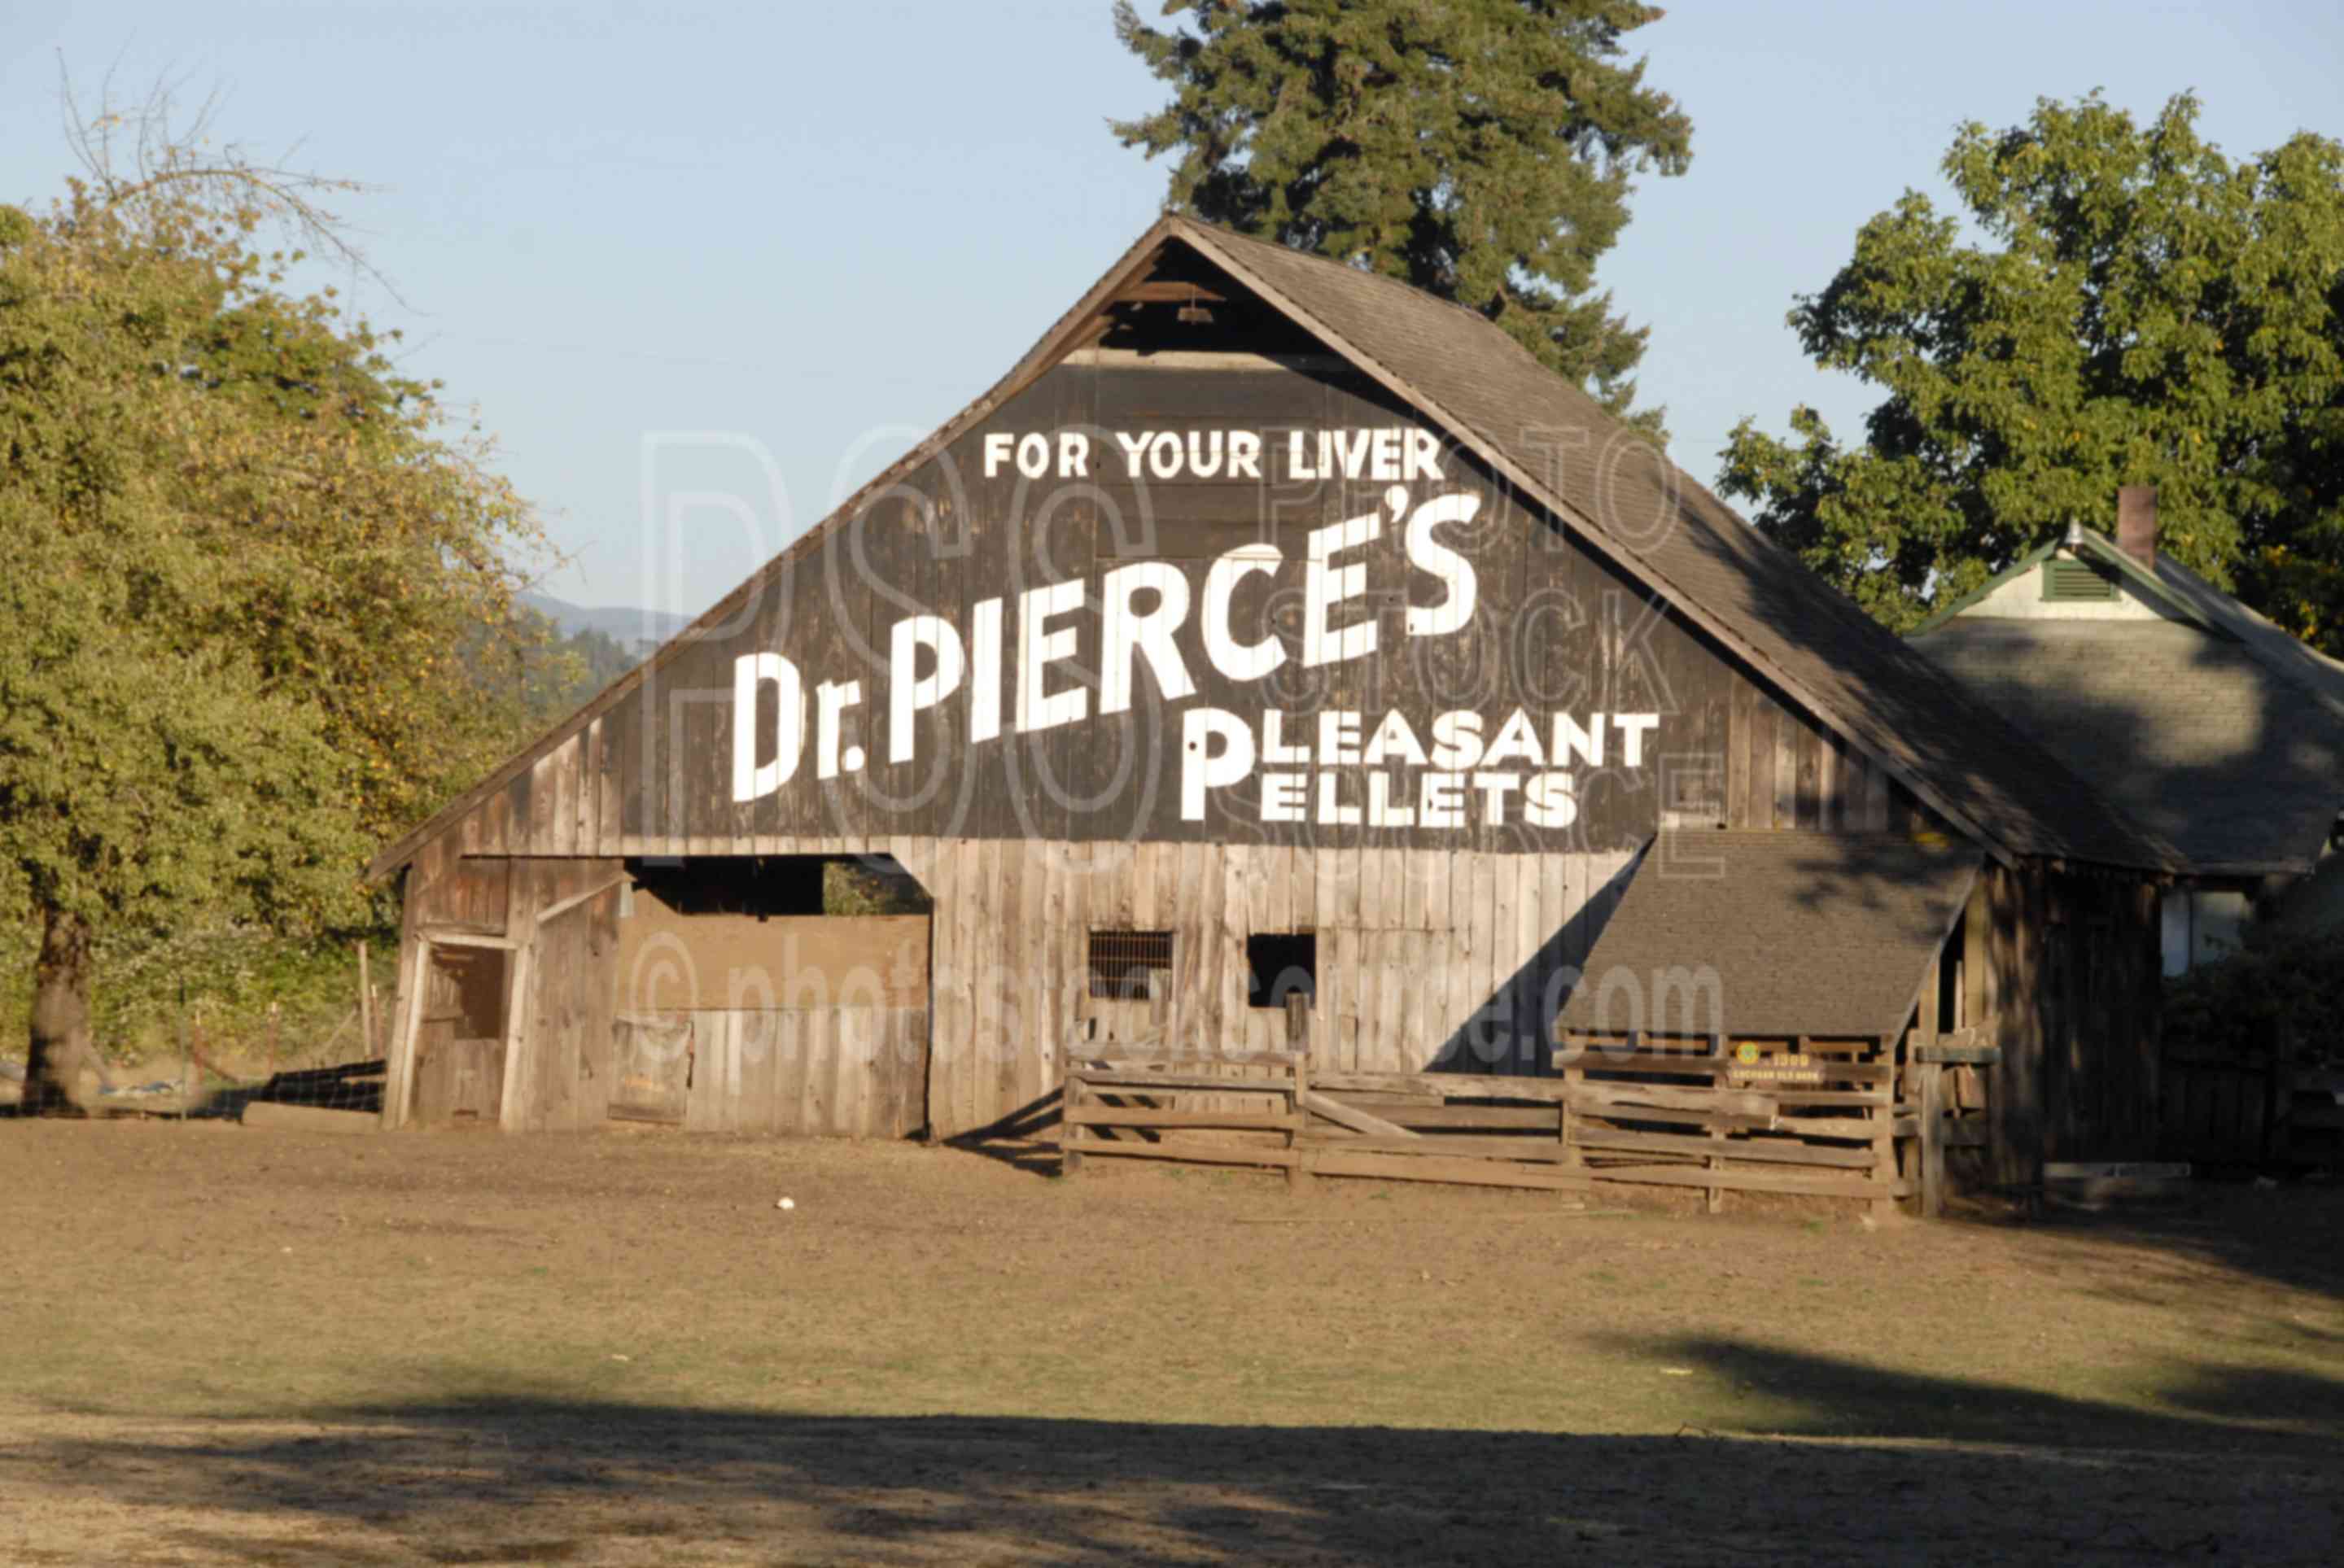 Dr. Pierce Barn Sign,barn,rural,barn sign,dr. pierce,pleasant pellets,sign,barn painting,history,historical,americana,nostalgia,signs symbols flags,barns